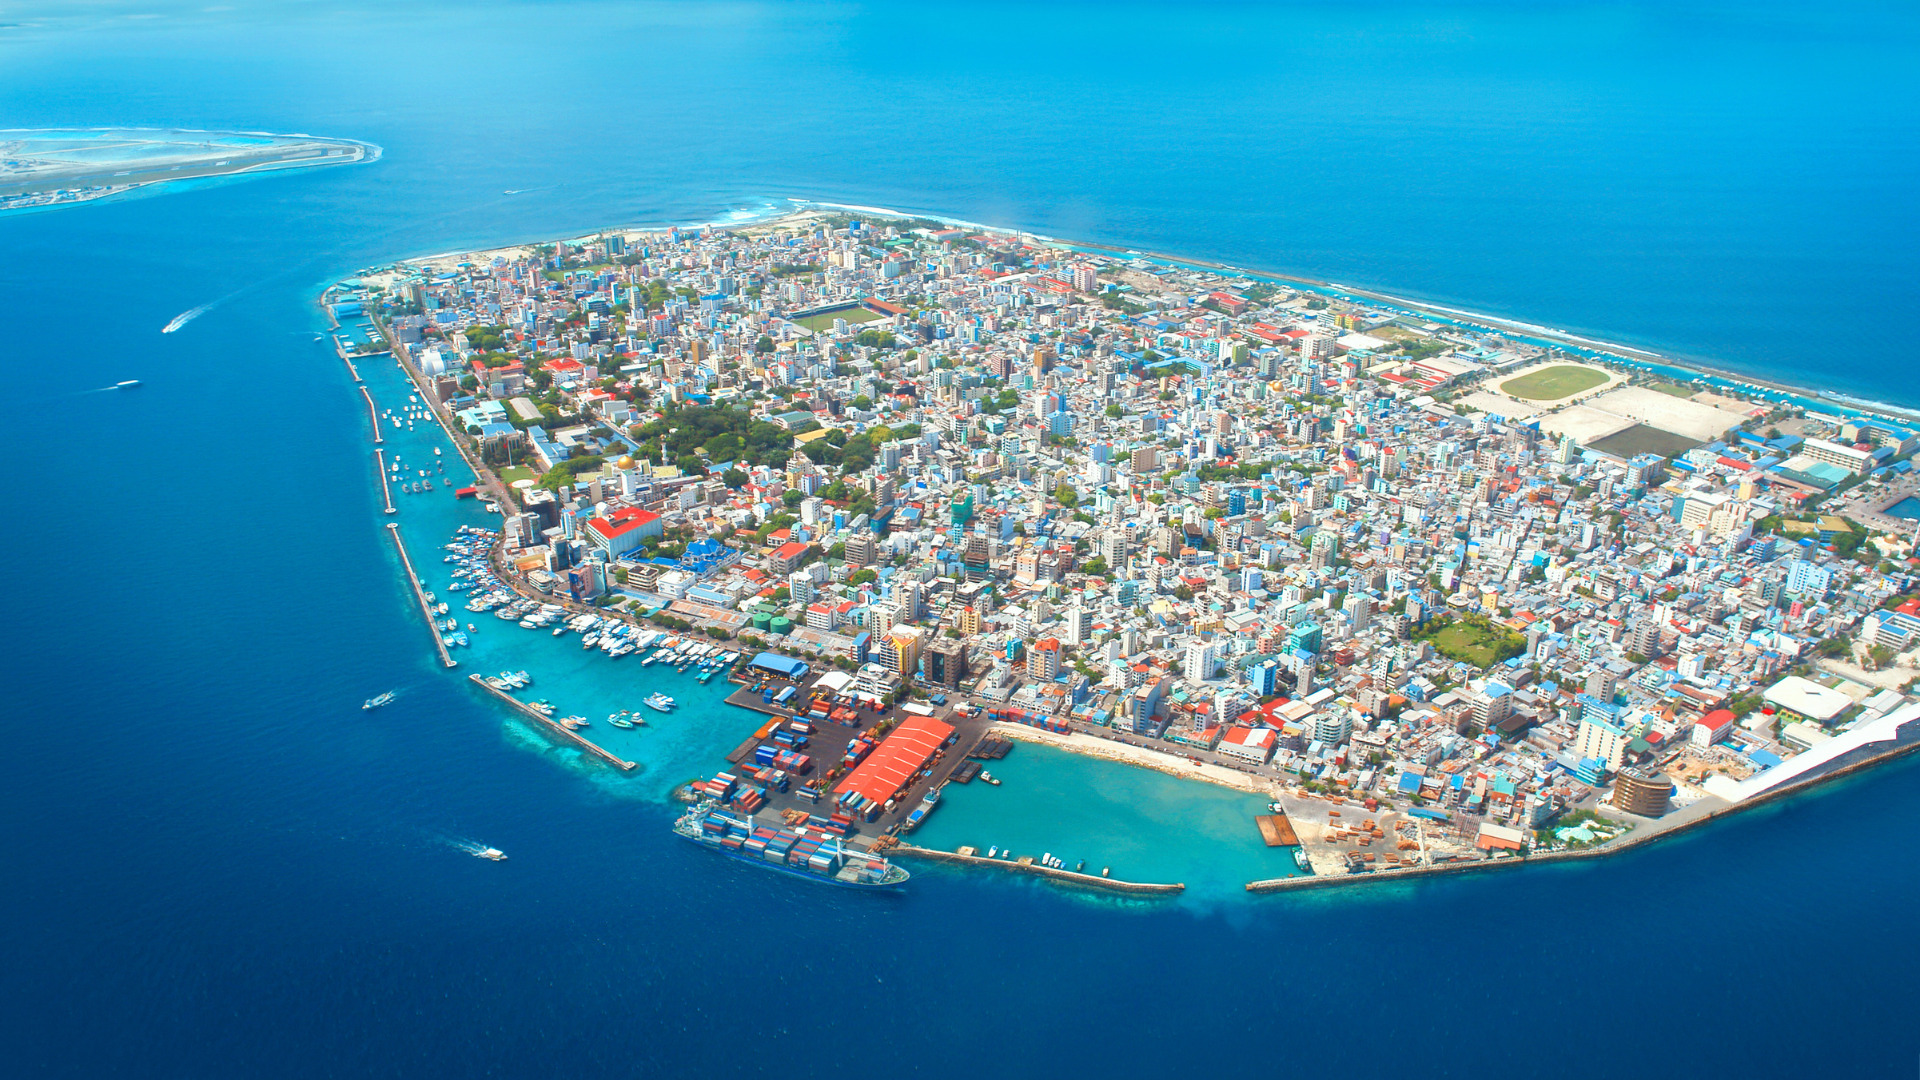 Maldives: Trouble in the neighbourhood